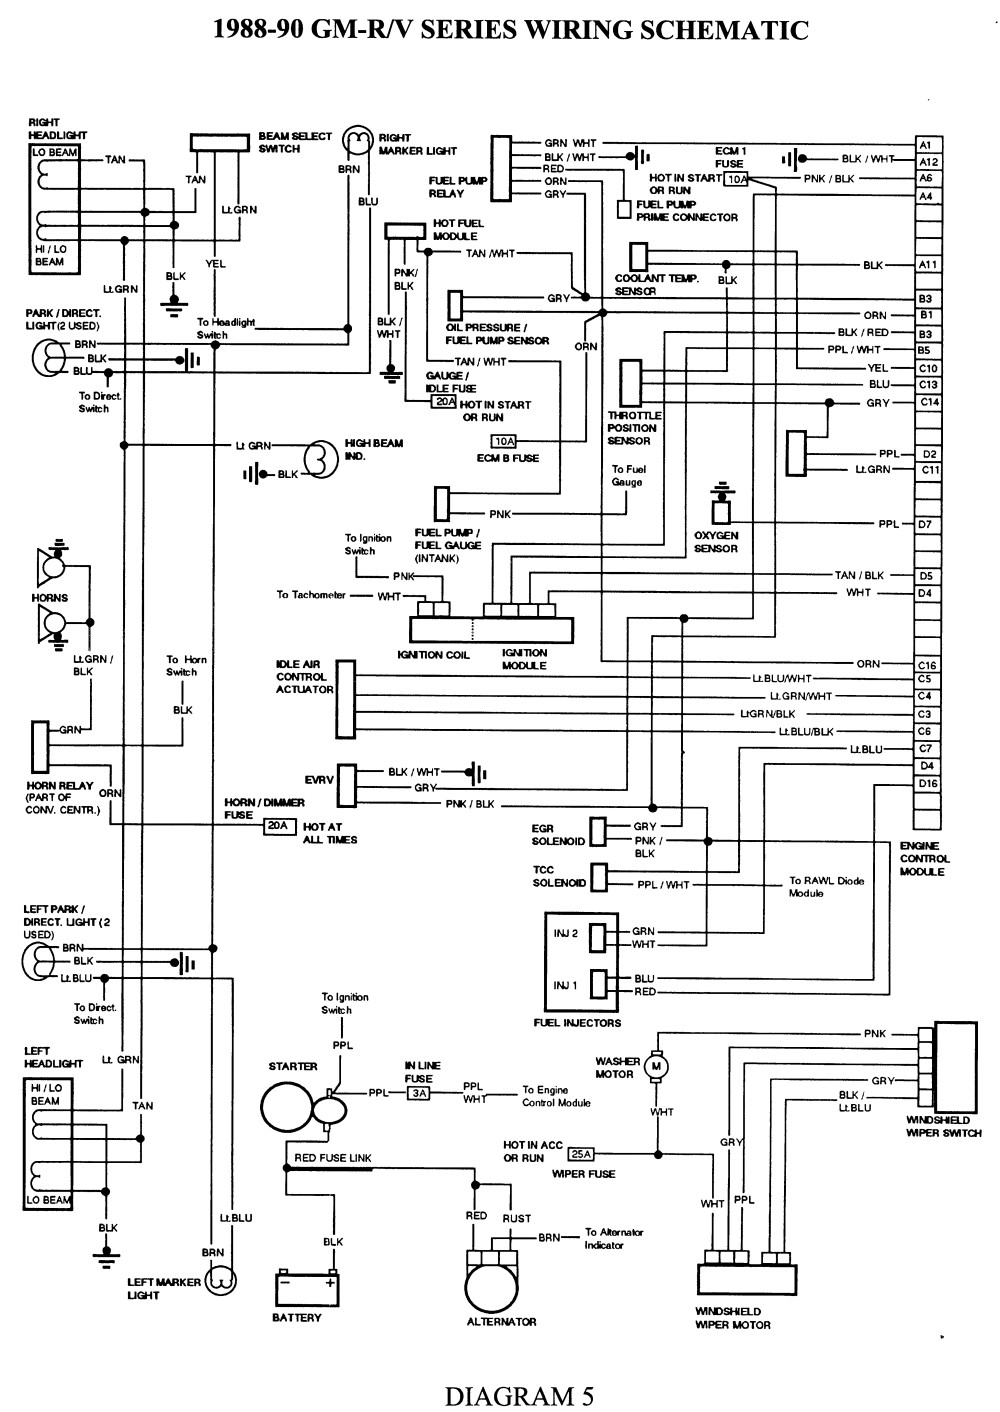 chevrolet p30 chis wiring diagram - Wiring Diagram